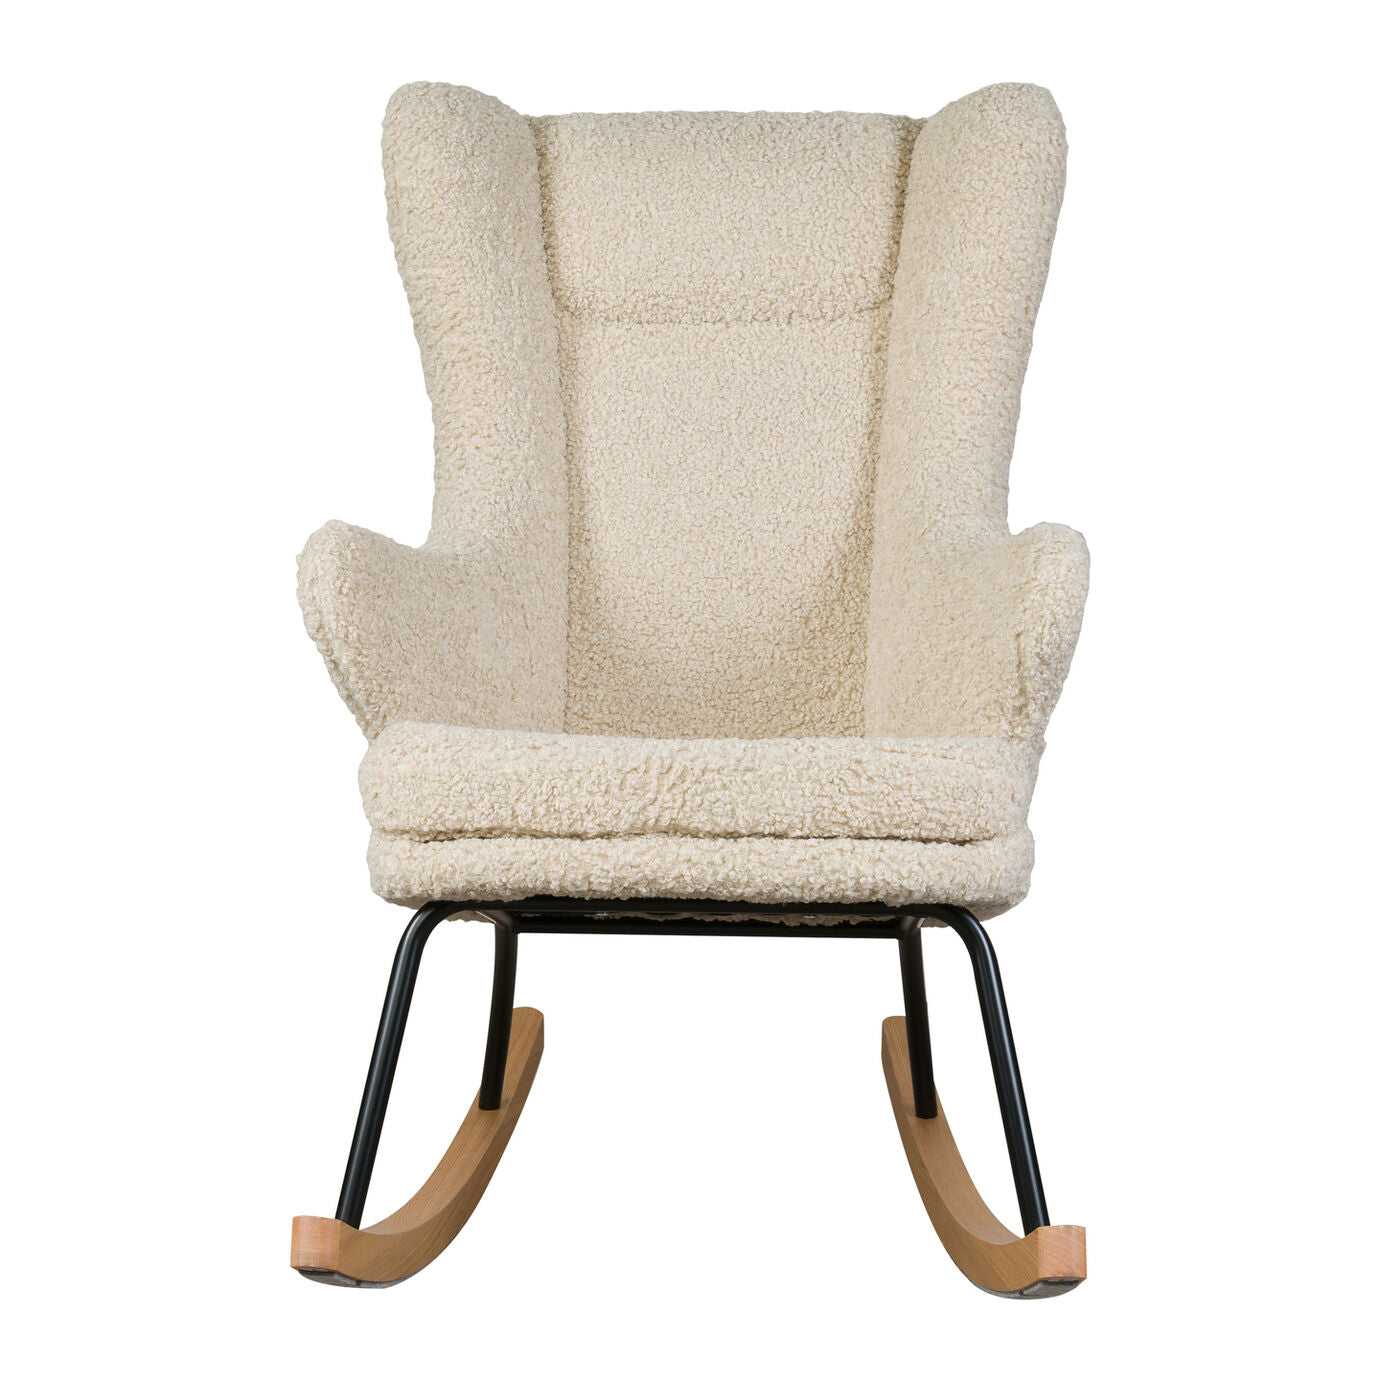 Quax - Rocking Adult Chair De Luxe - Sheep